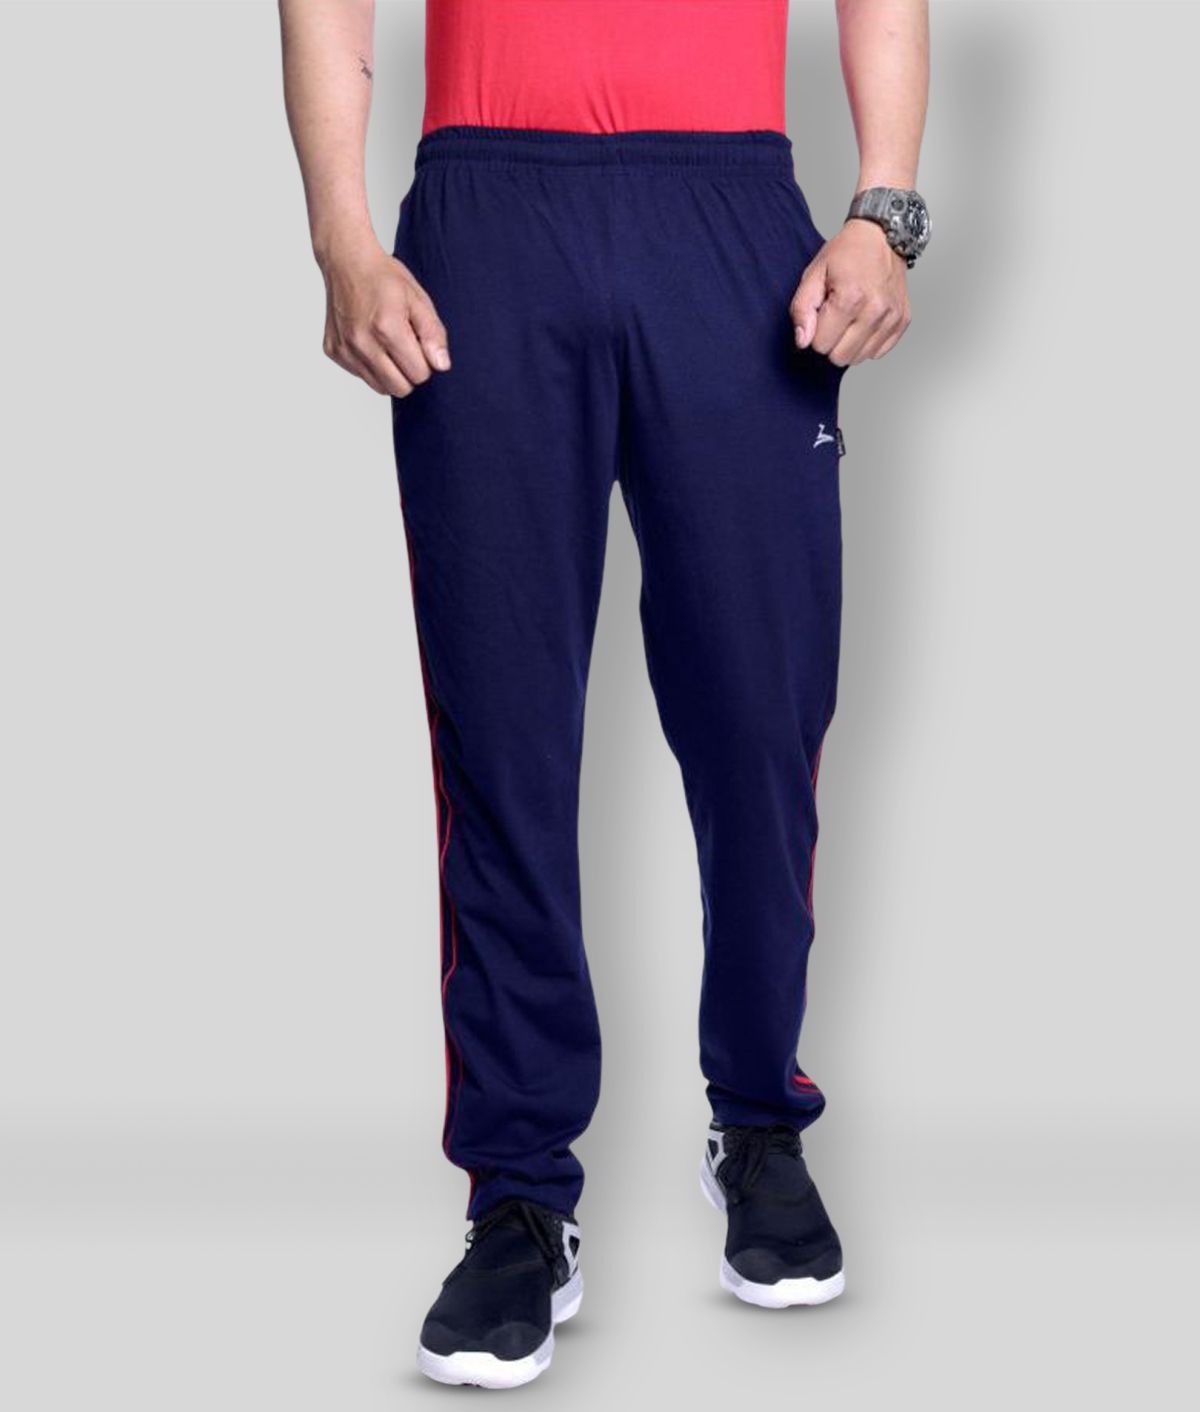 Zeffit - Navy Blue Cotton Blend Men's Sports Trackpants ( Pack of 1 )